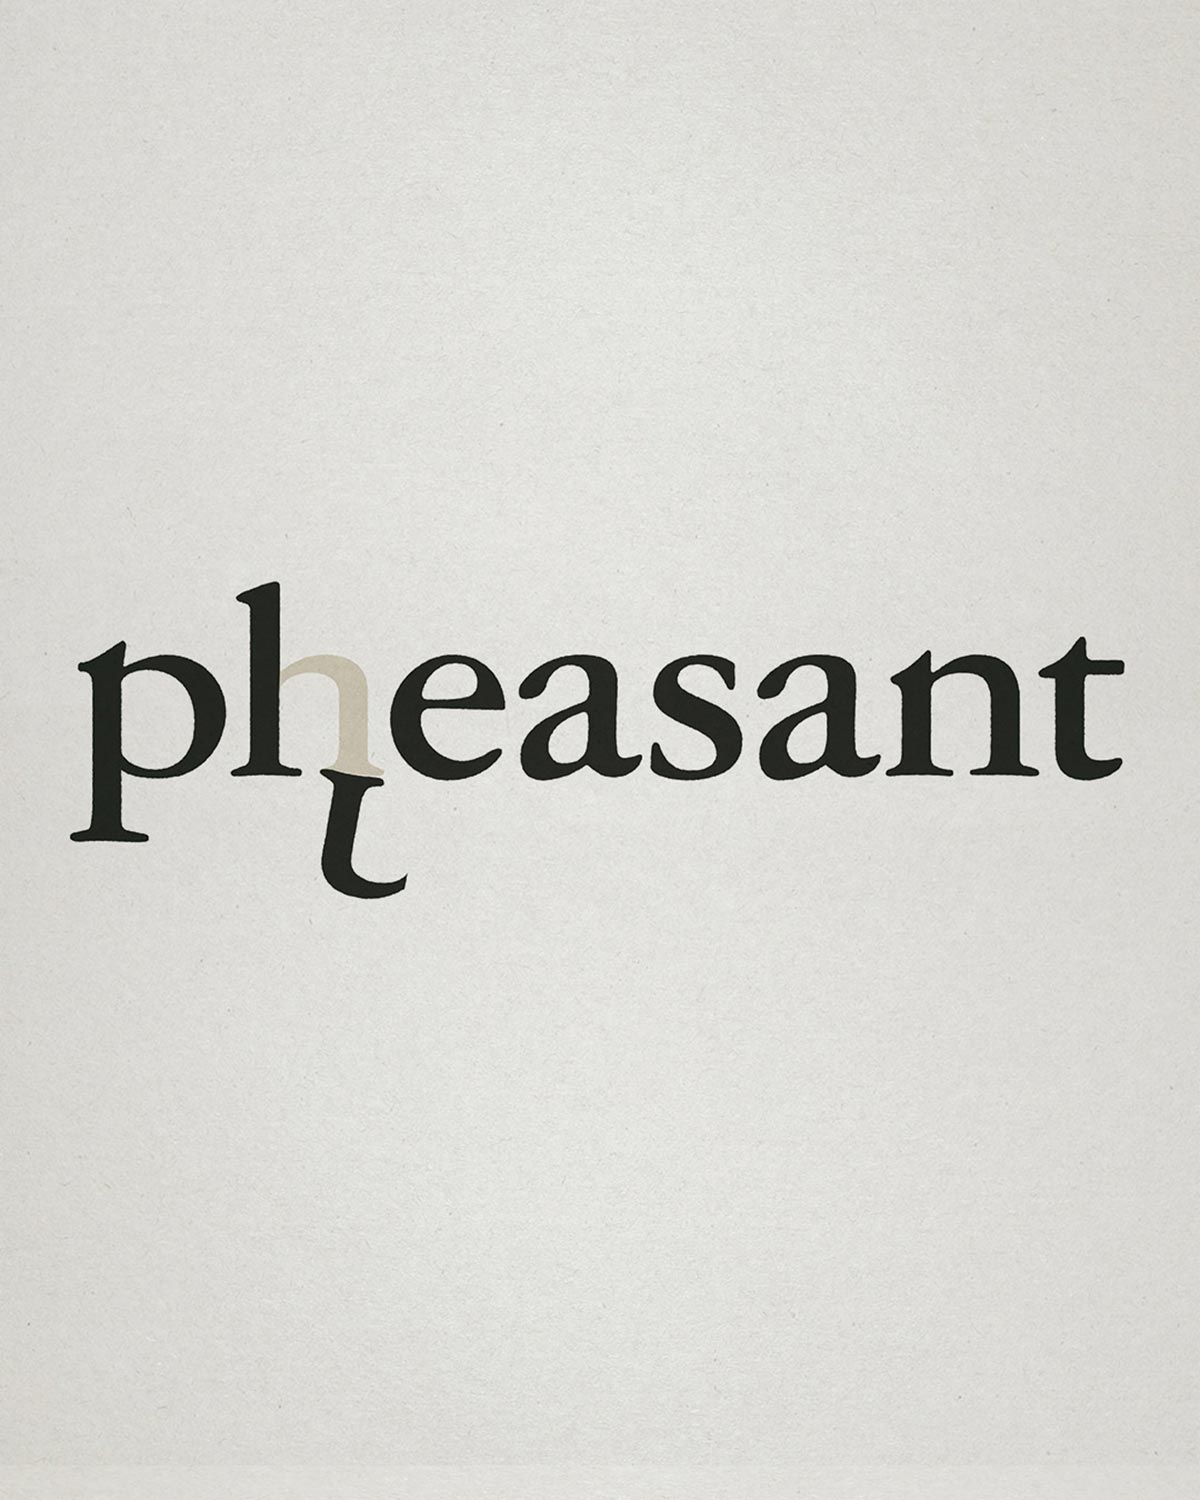 pleasant